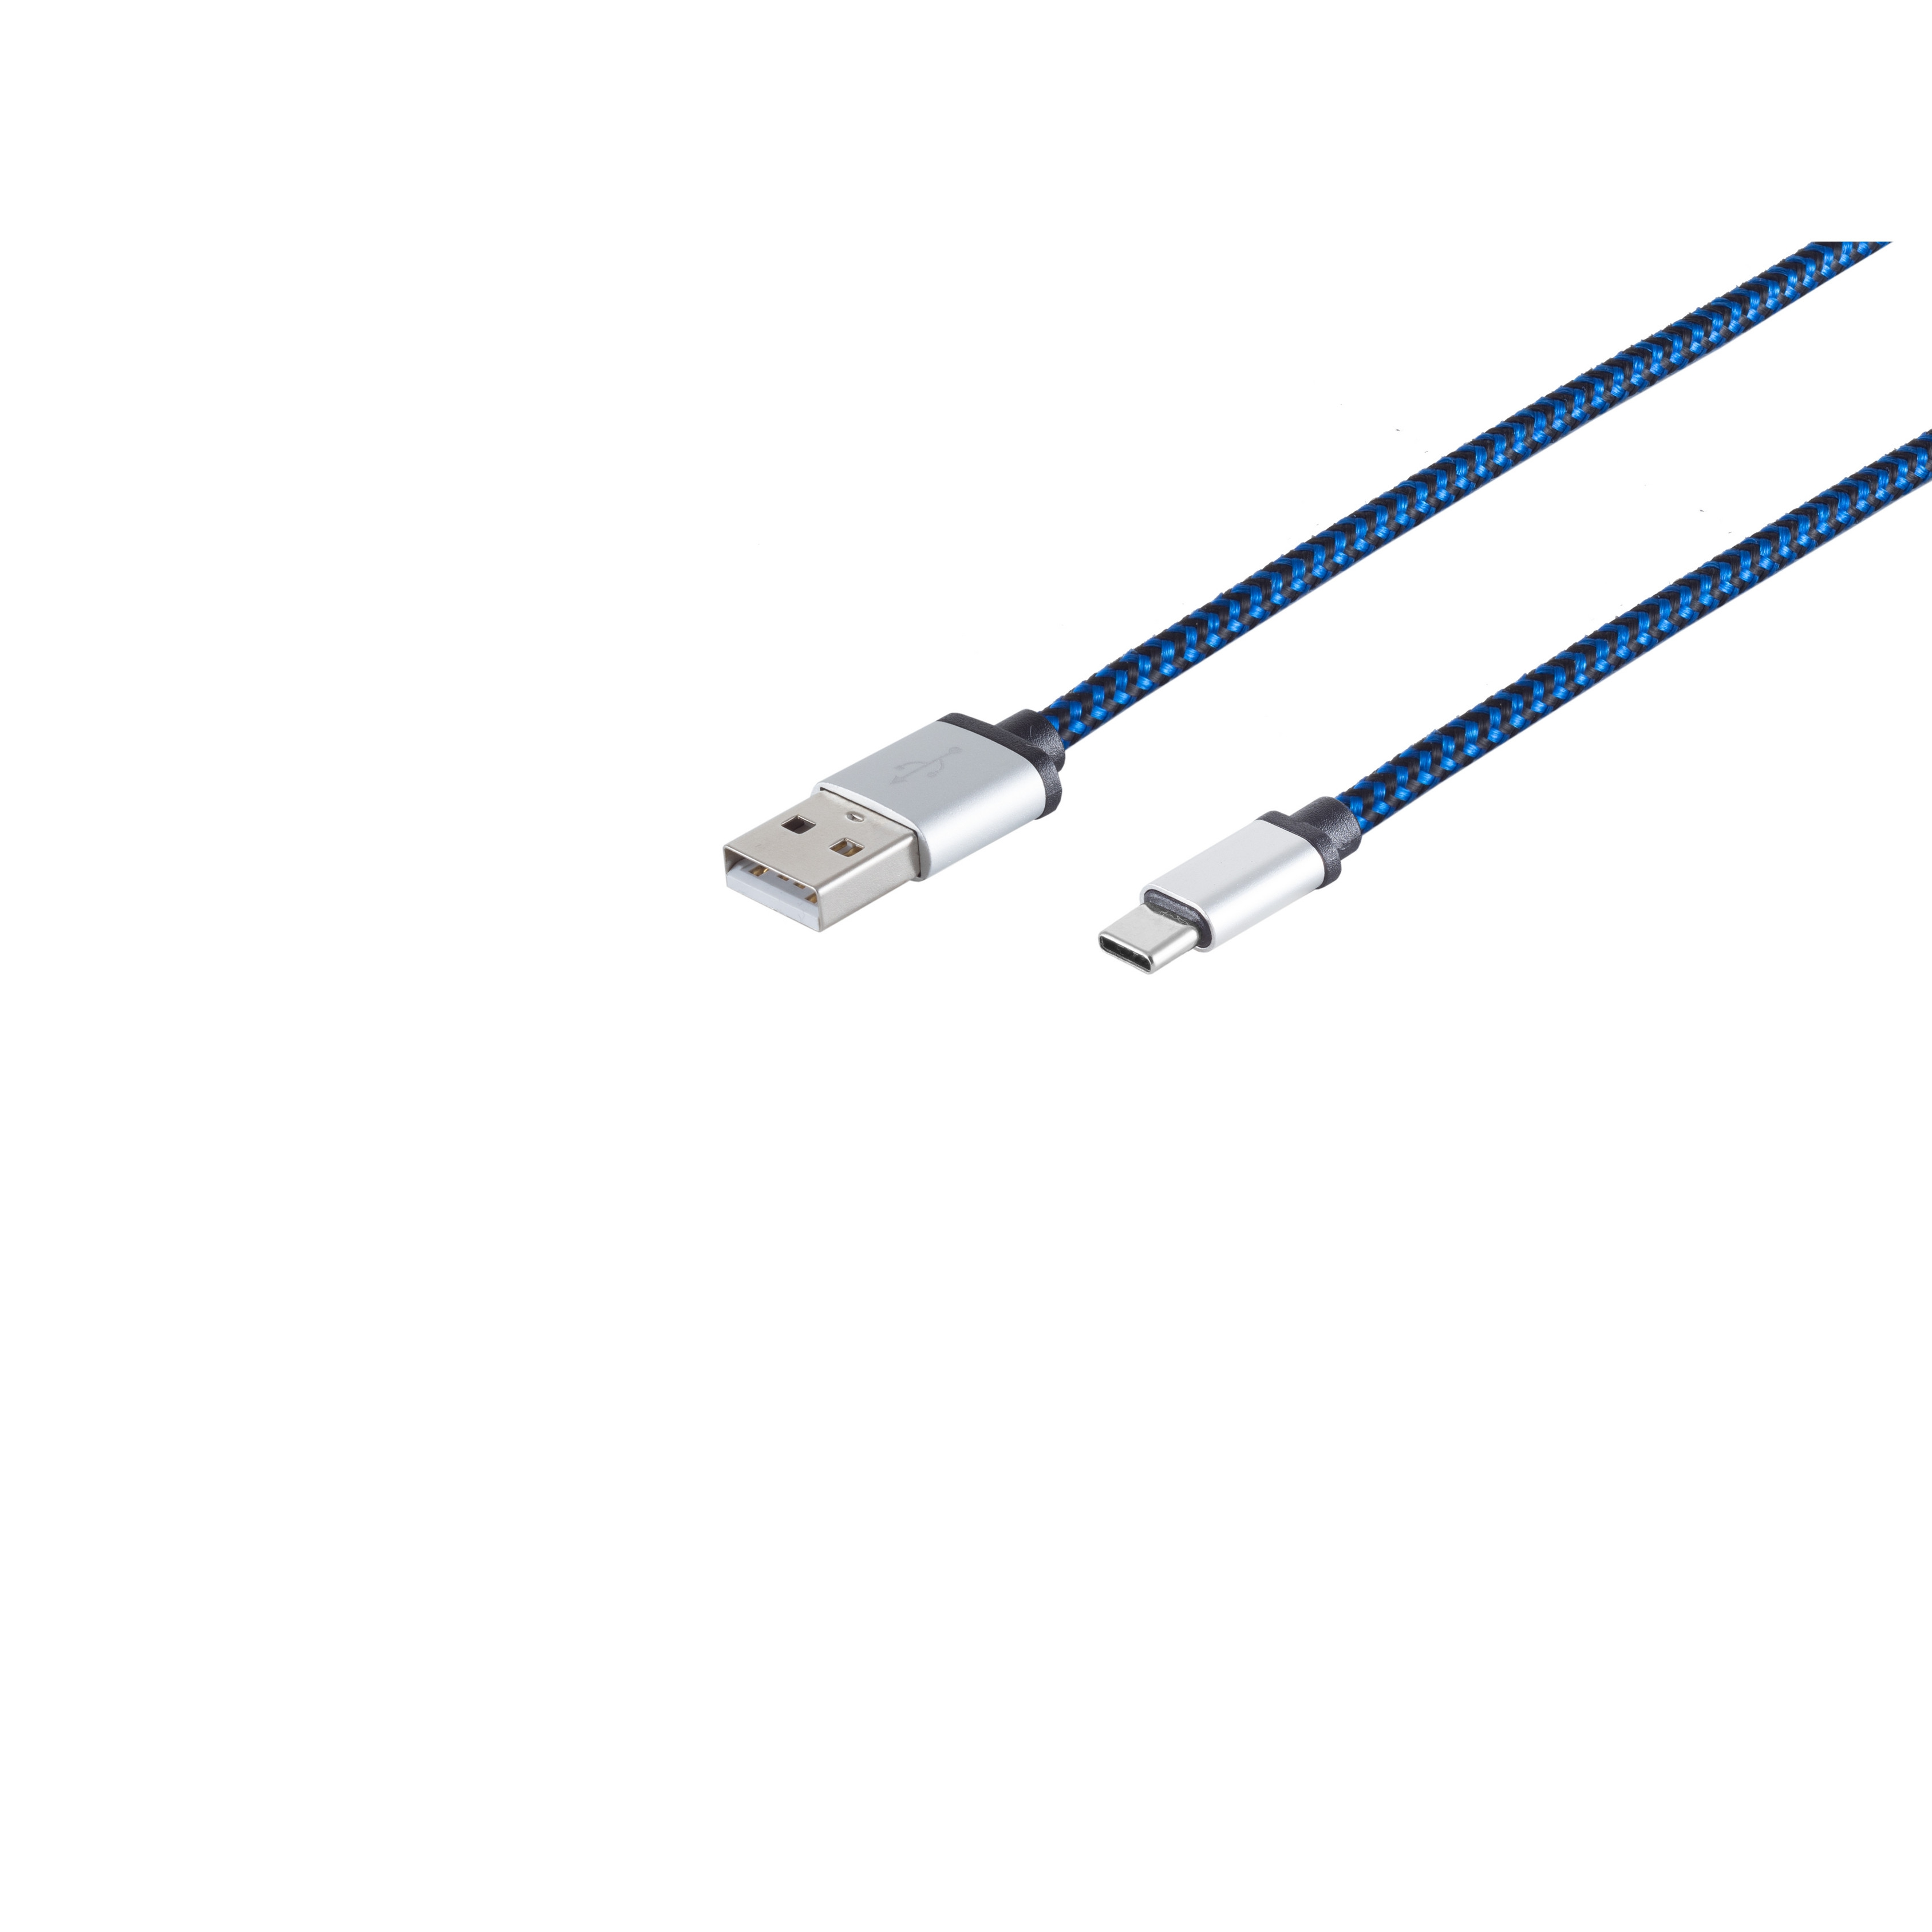 C, blau USB-Ladekabel Typ USB S/CONN A Stecker MAXIMUM auf CONNECTIVITY 2m USB Kabel